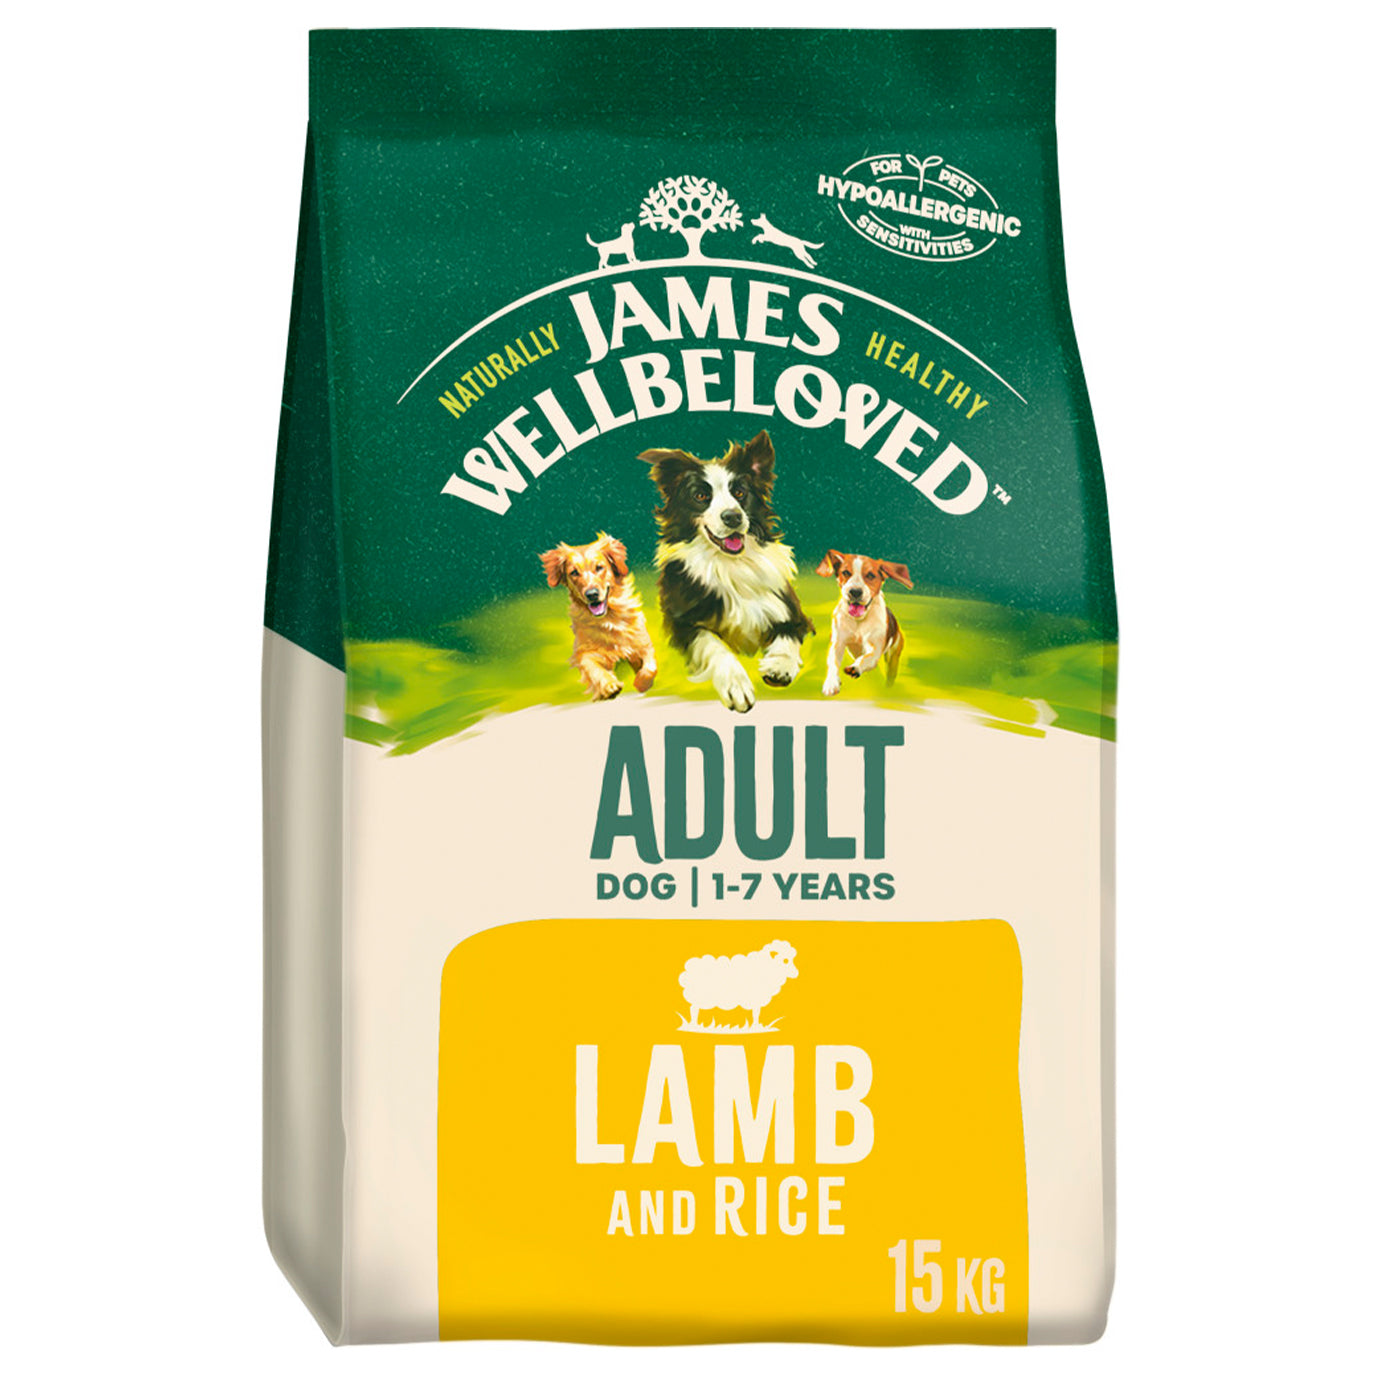 James Wellbeloved Lamb & Rice Adult Dog Food 15KG